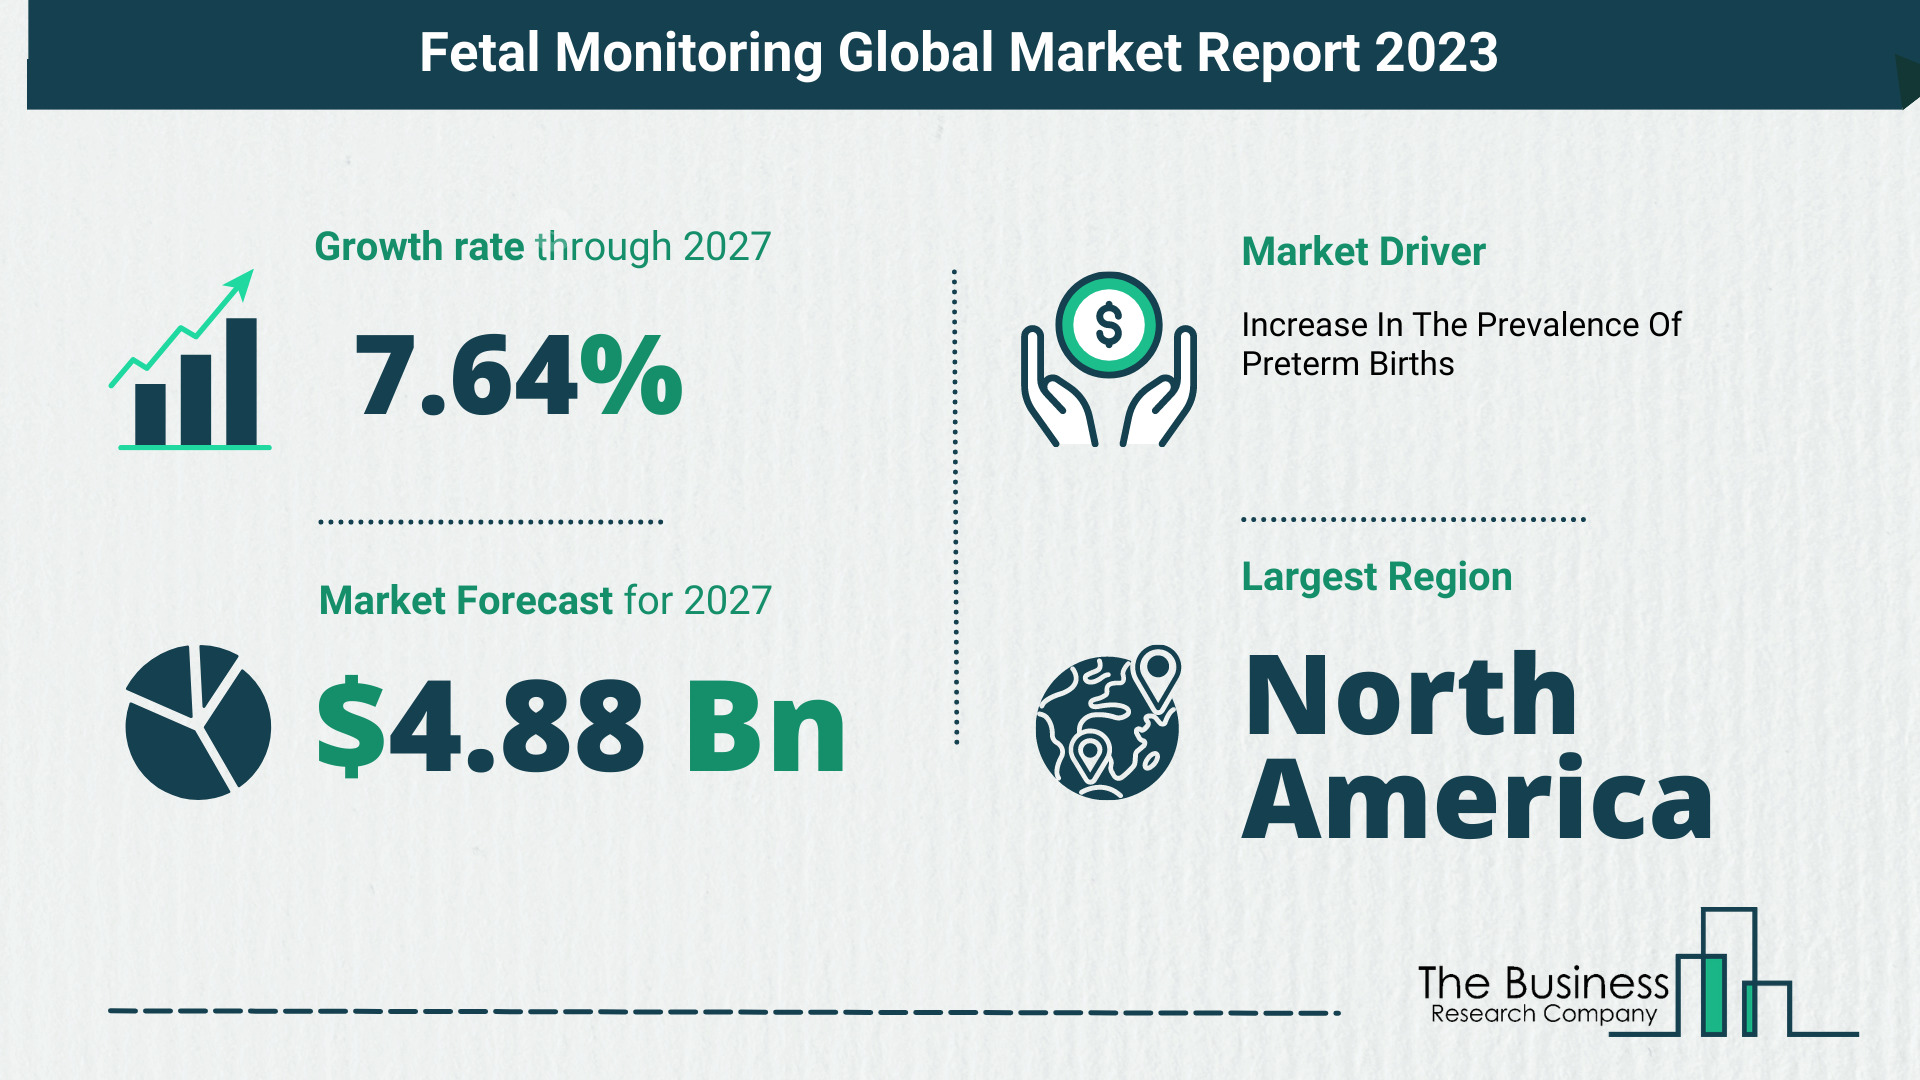 Global Fetal Monitoring Market